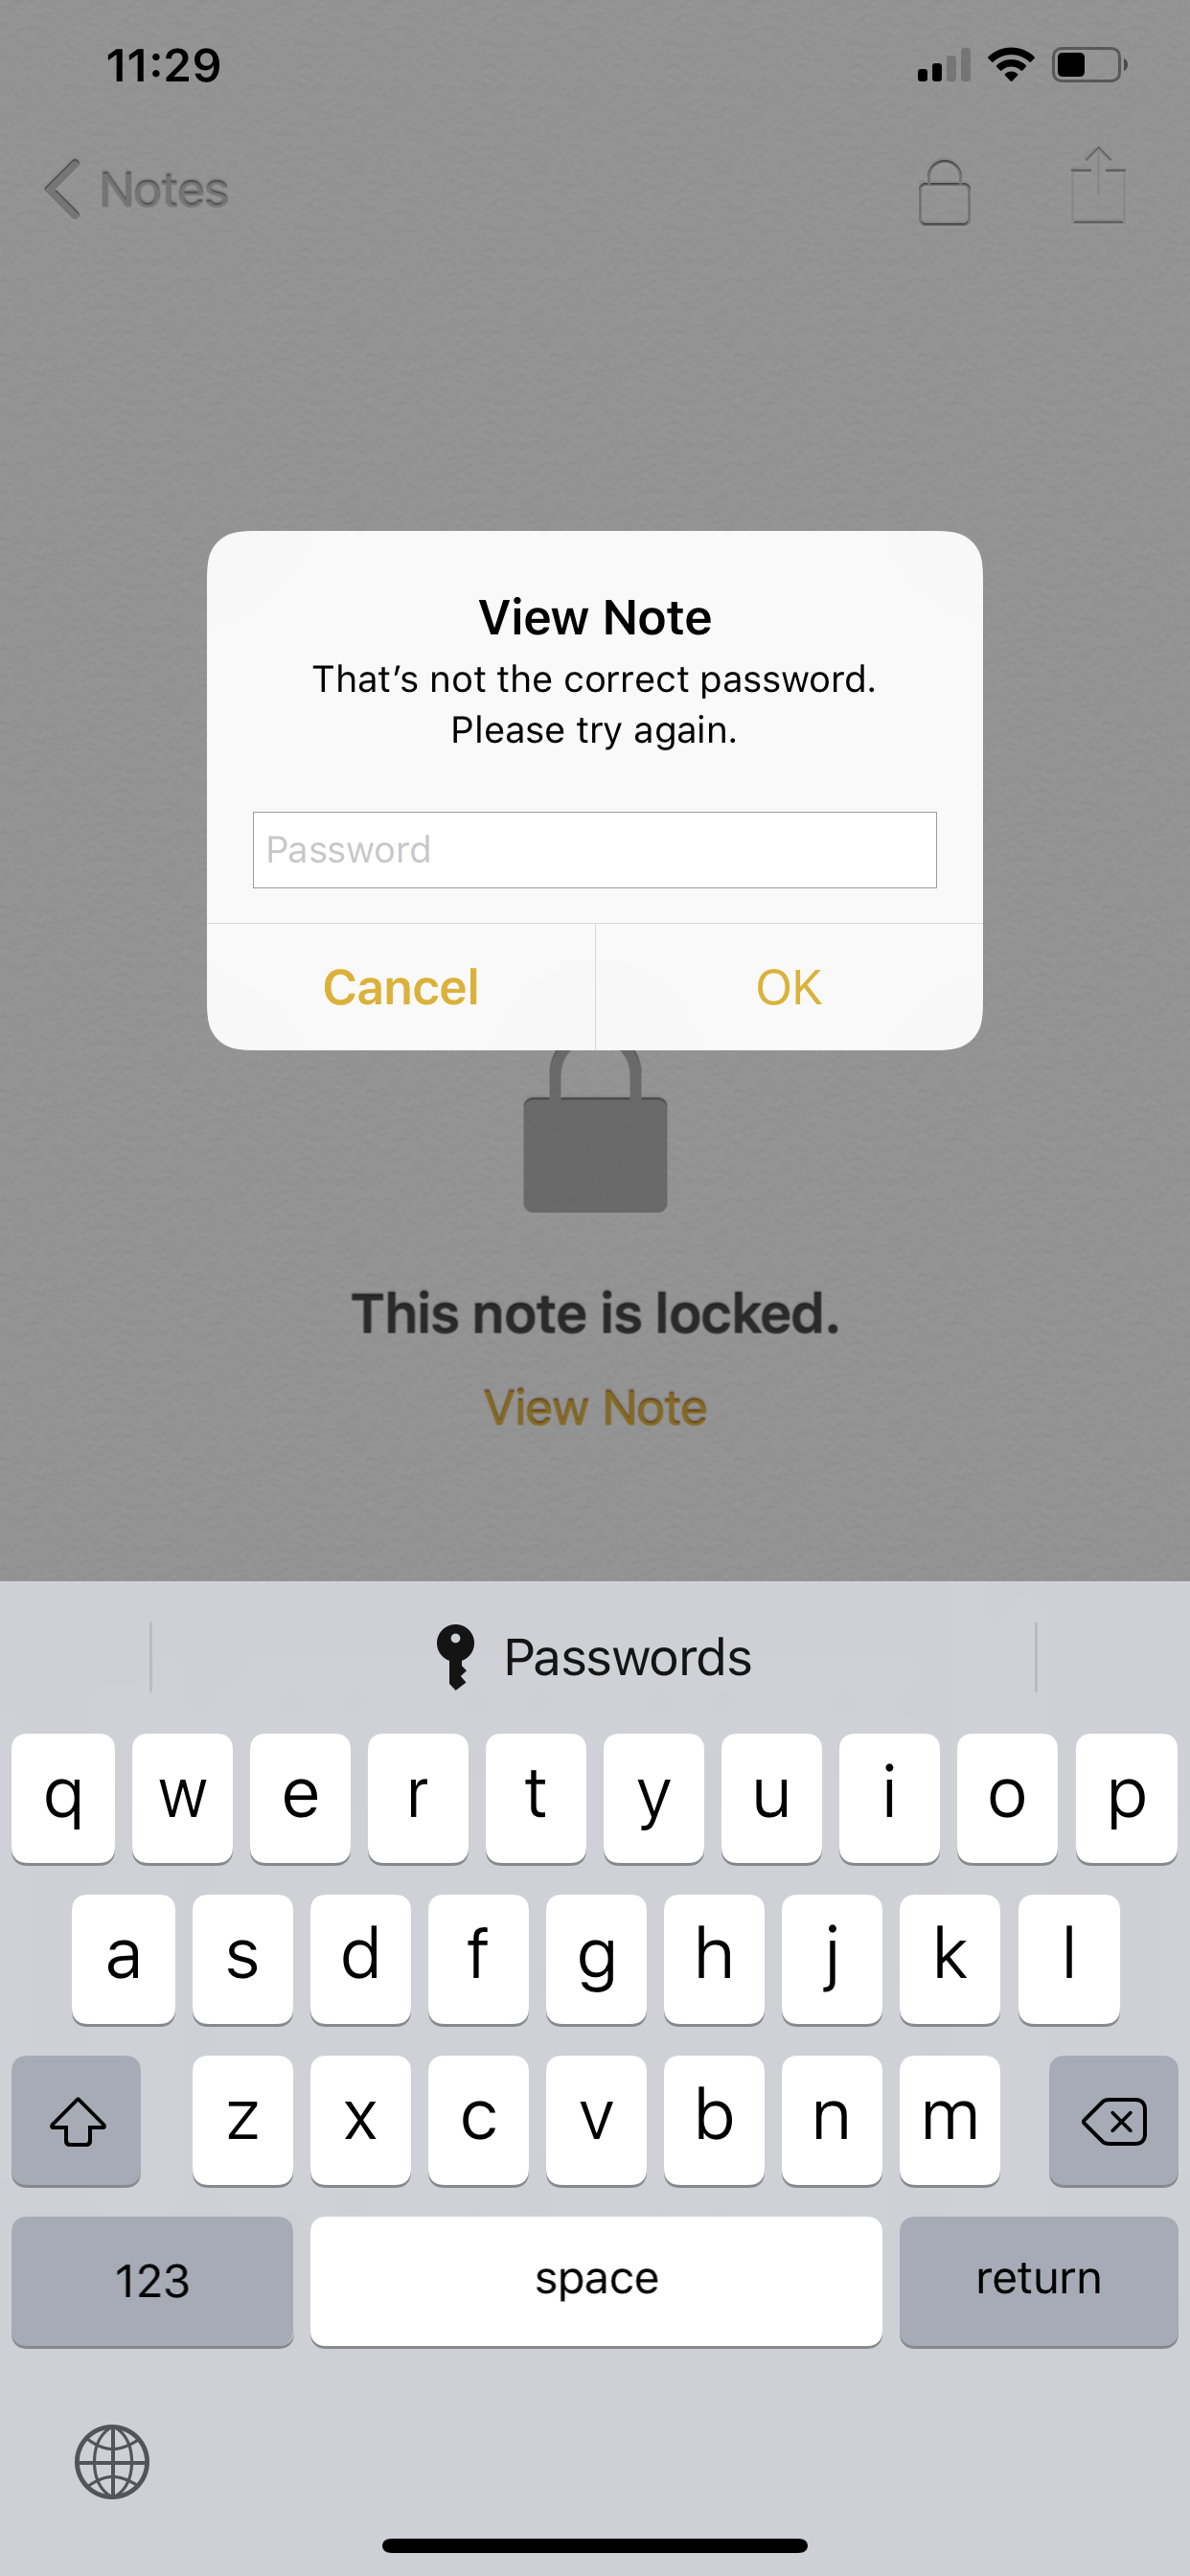 Note reset password - Apple Community